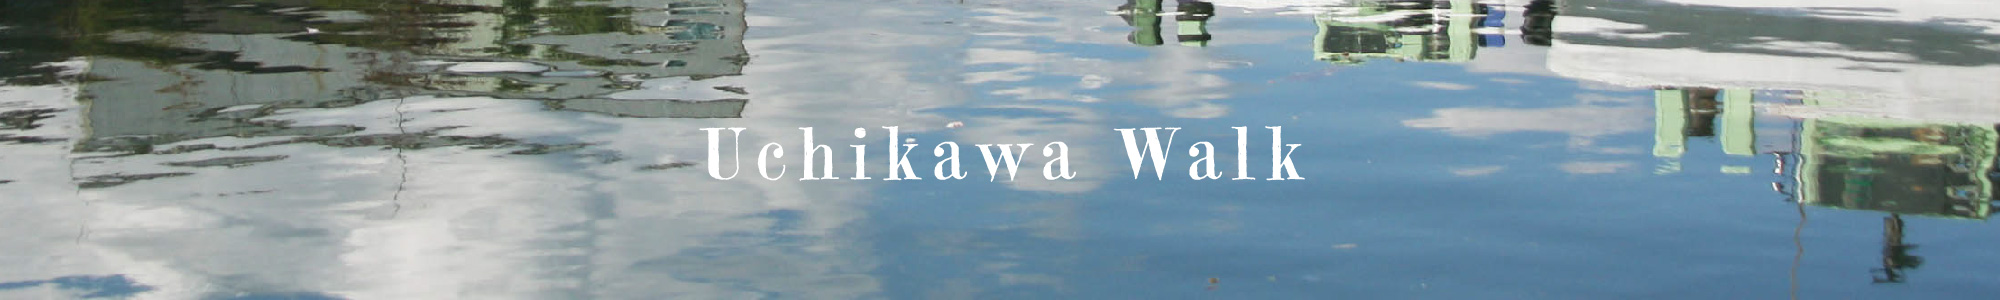 Uchikawa Walk